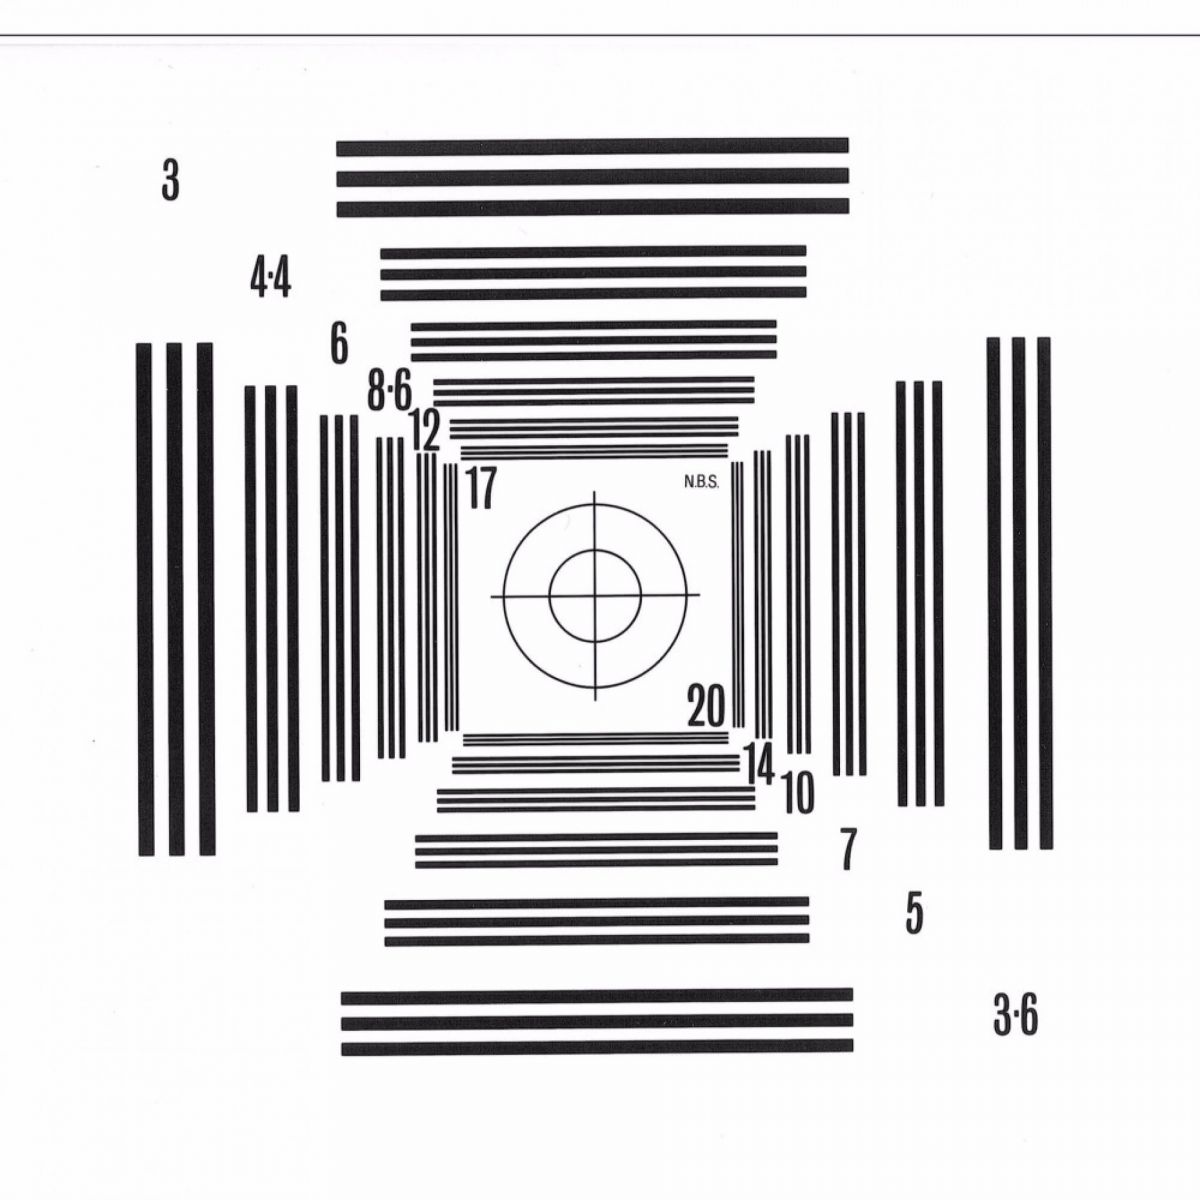 r60-nbs-pattern(1).jpg